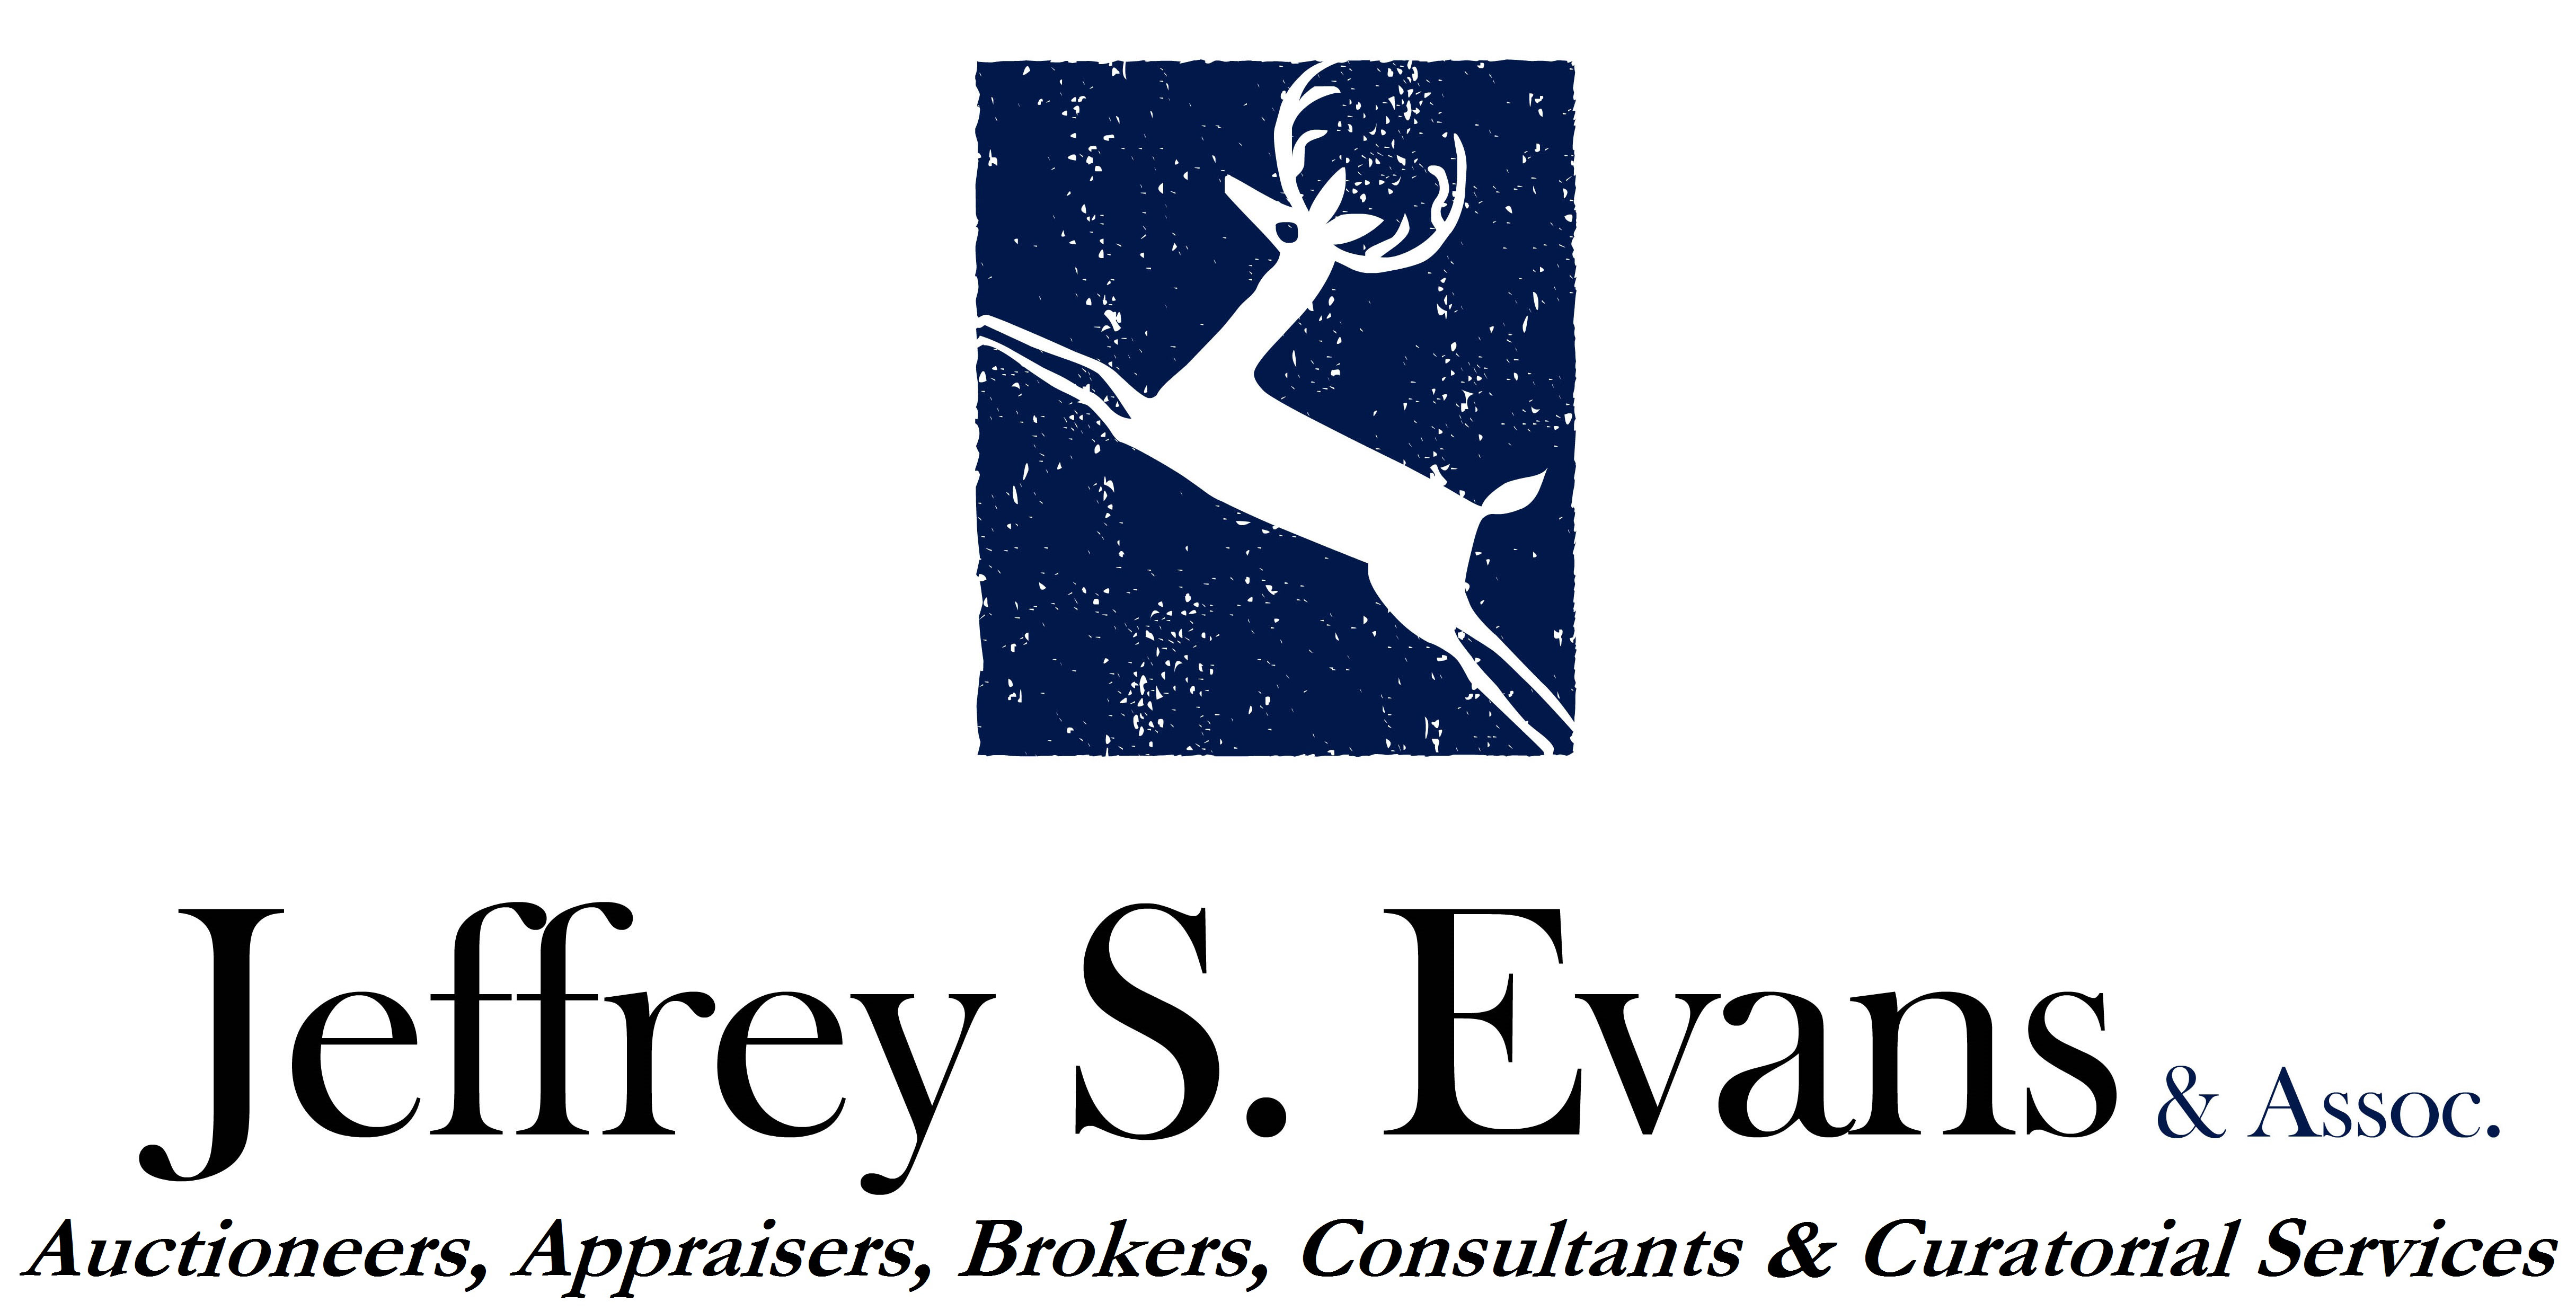 Jeffrey Evans Logo 